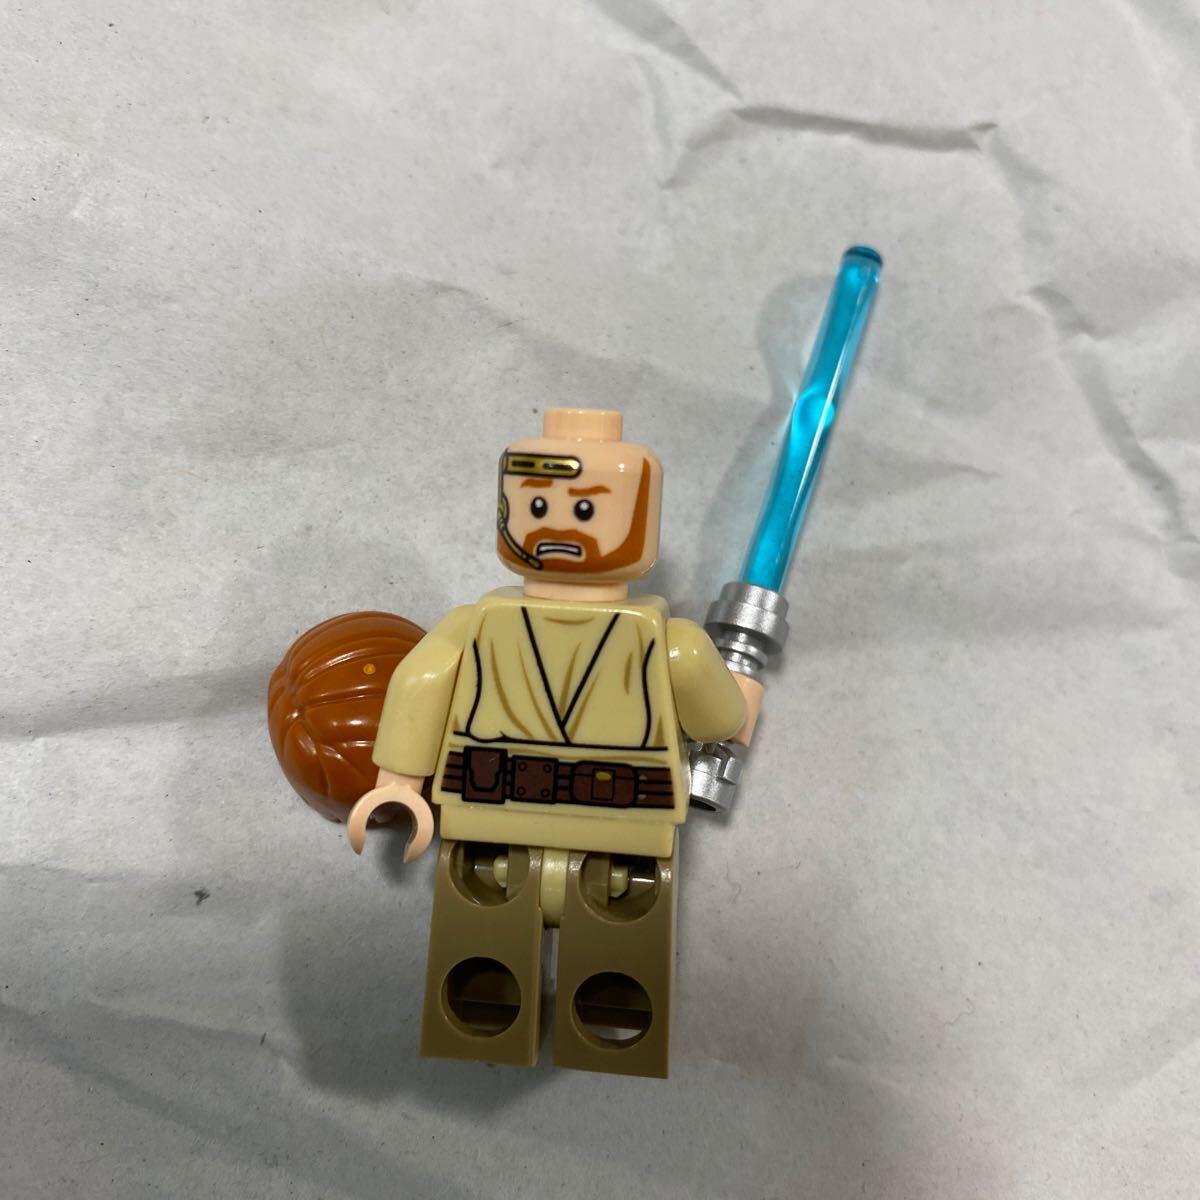  Lego Звездные войны мини фигурка Lego Star * War z Obi = one. Jedi * Inter Scepter 75135